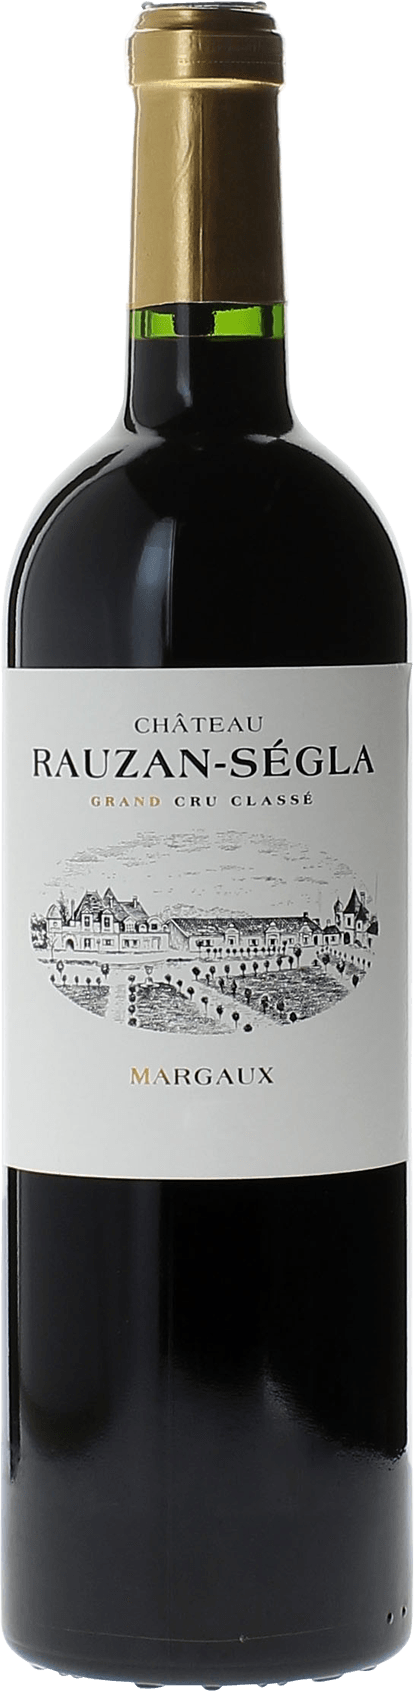 Rauzan-segla 2017 2me Grand cru class Margaux, Bordeaux rouge